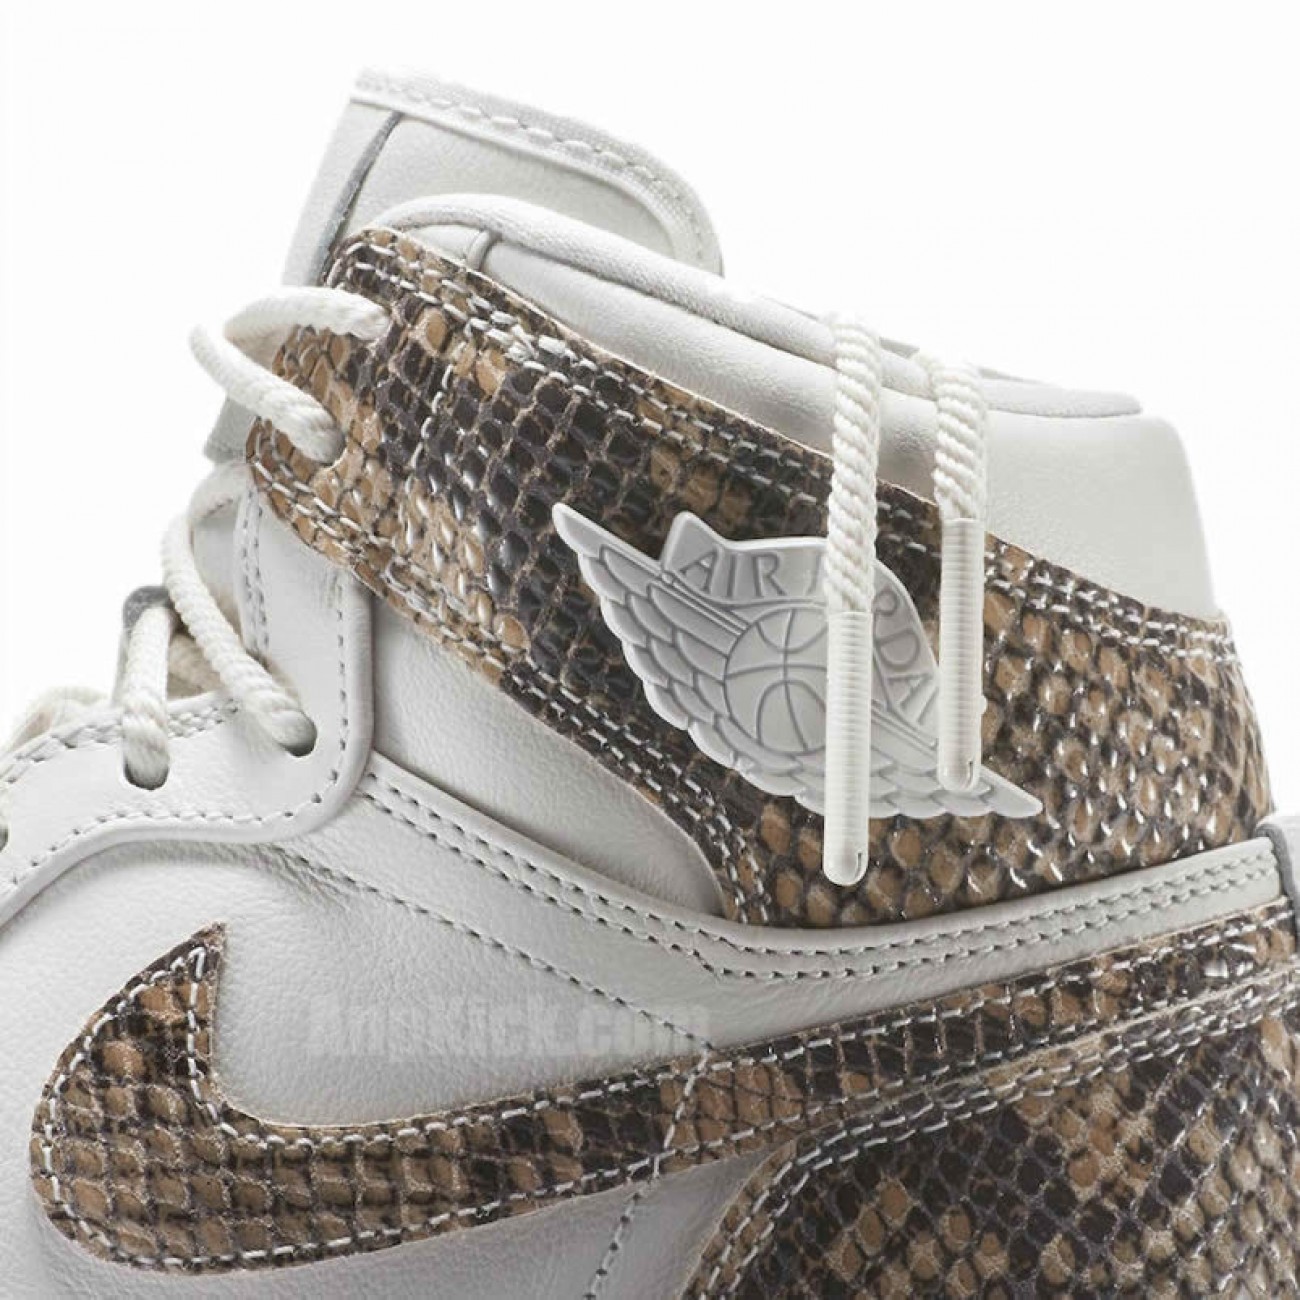 Air Jordan 1 Retro High "Snakeskin" White Shoes AH7389-004